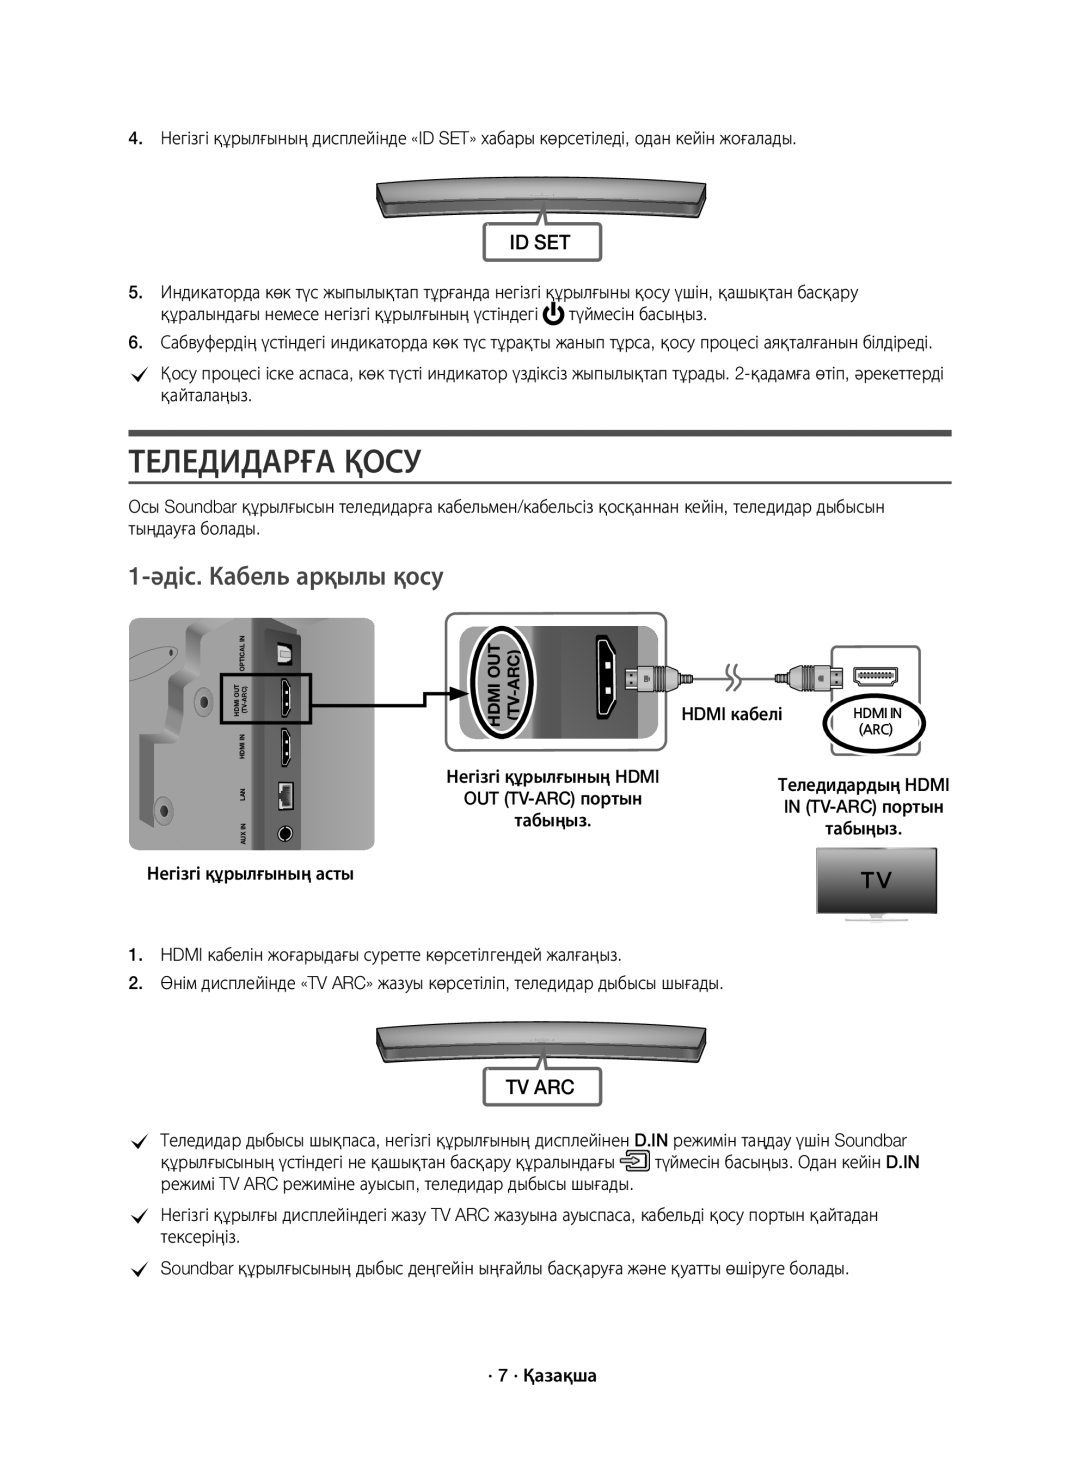 Samsung HW-J7500/RU manual Теледидарға Қосу, Әдіс. Кабель арқылы қосу 